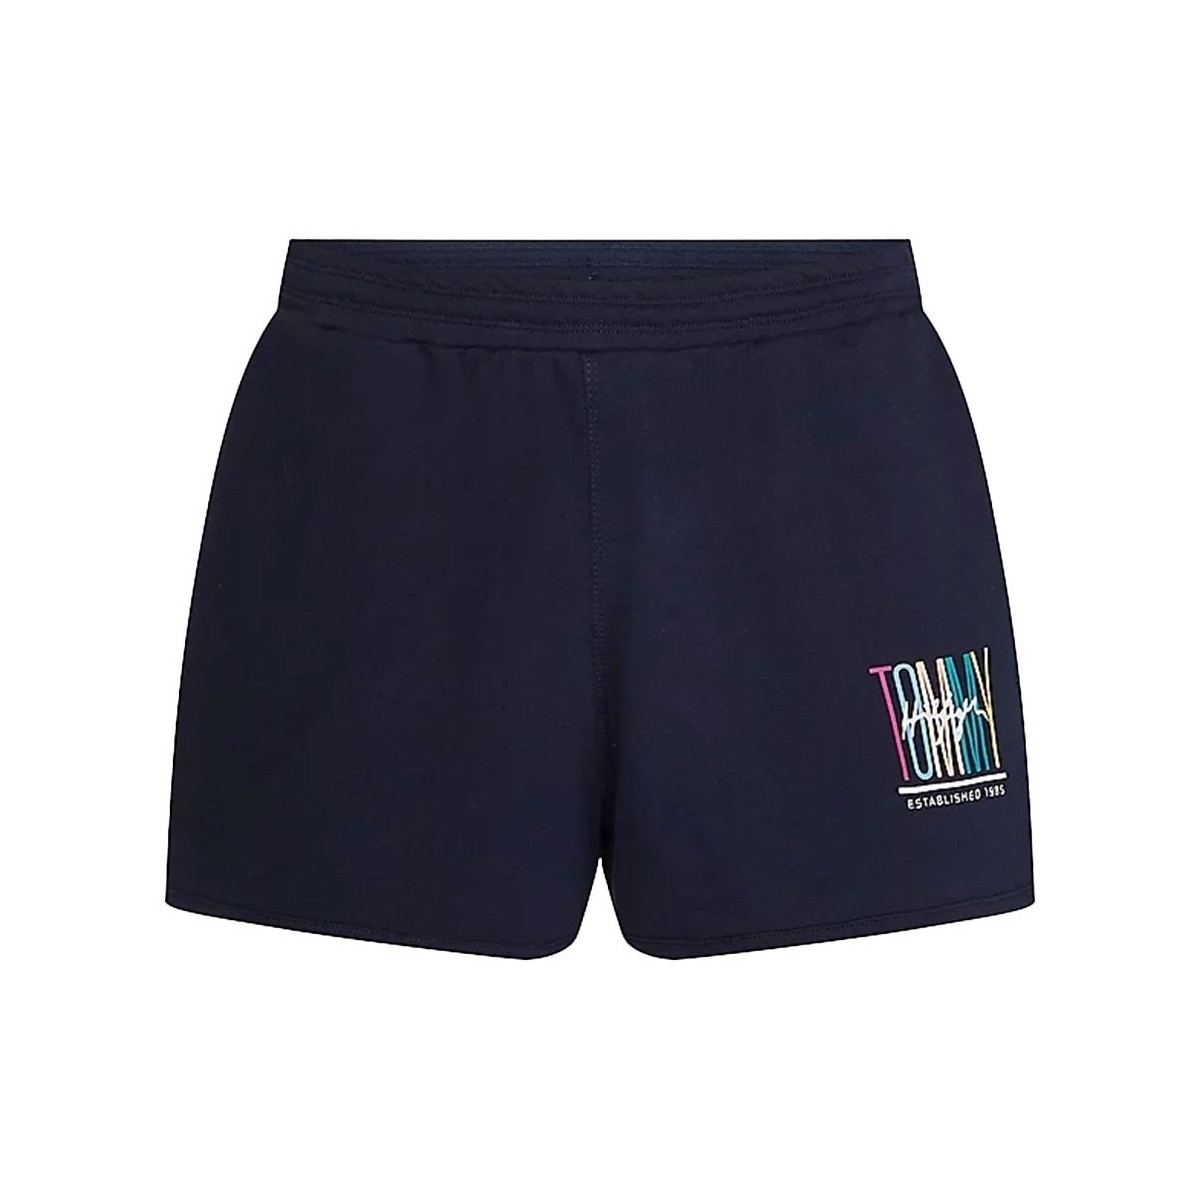 Vêtements Femme Shorts / Bermudas Tommy Hilfiger Short  Ref 53402 DW5 marine Bleu